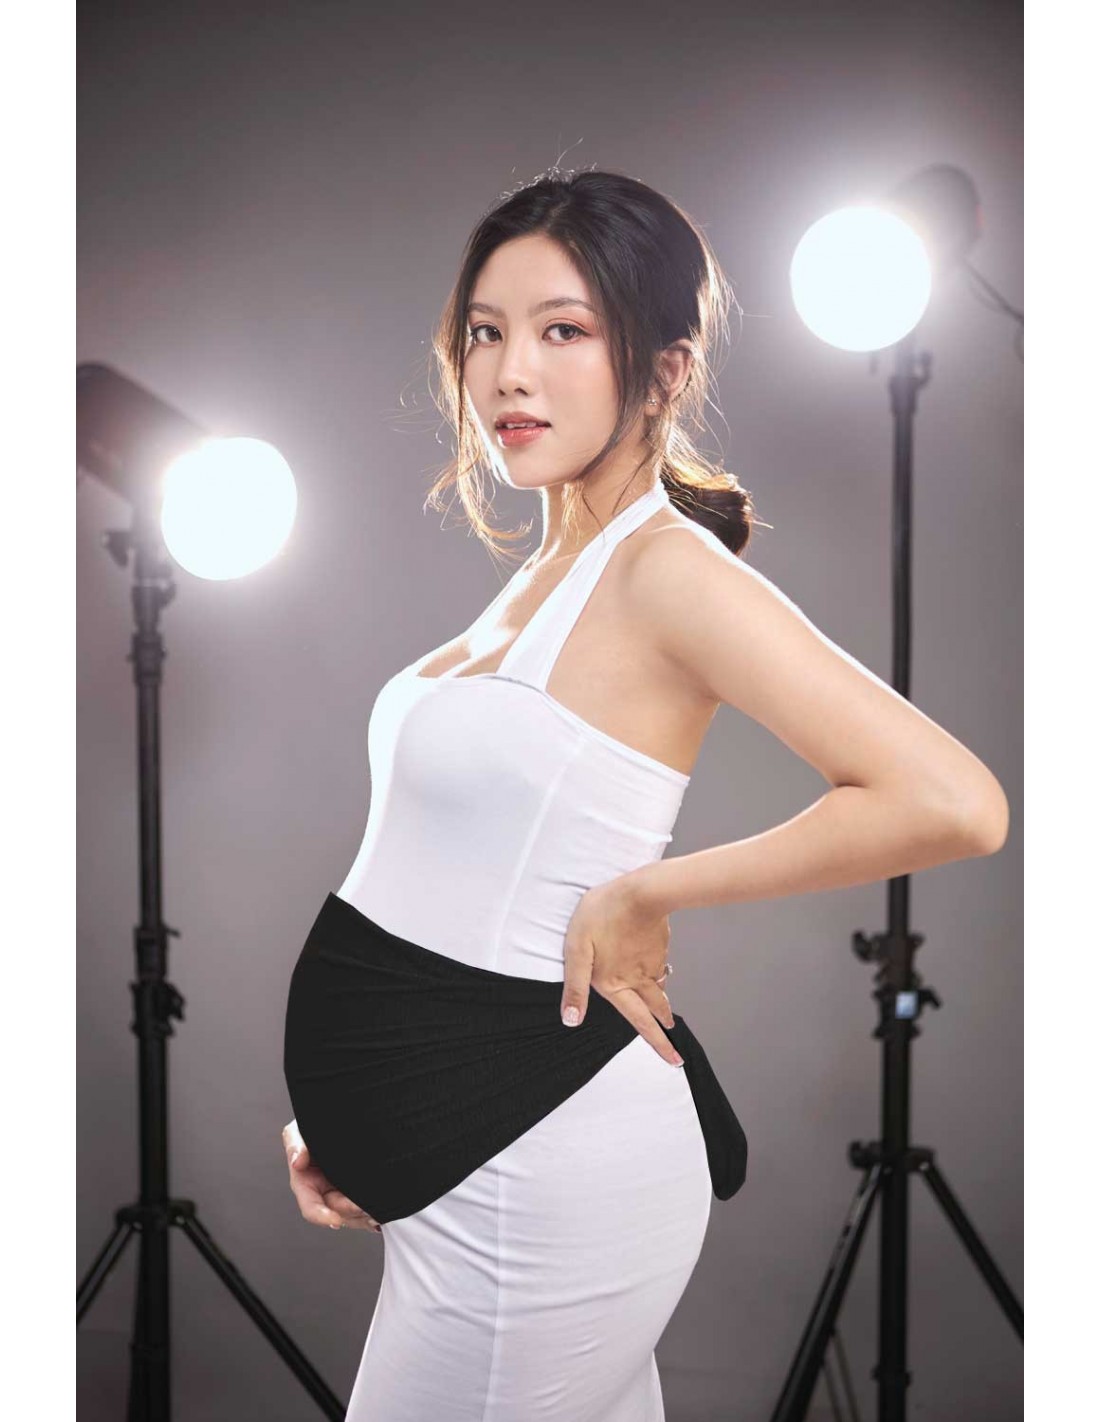 Ceinture anti-ondes femme enceinte, bandeau grossesse anti radiations noire